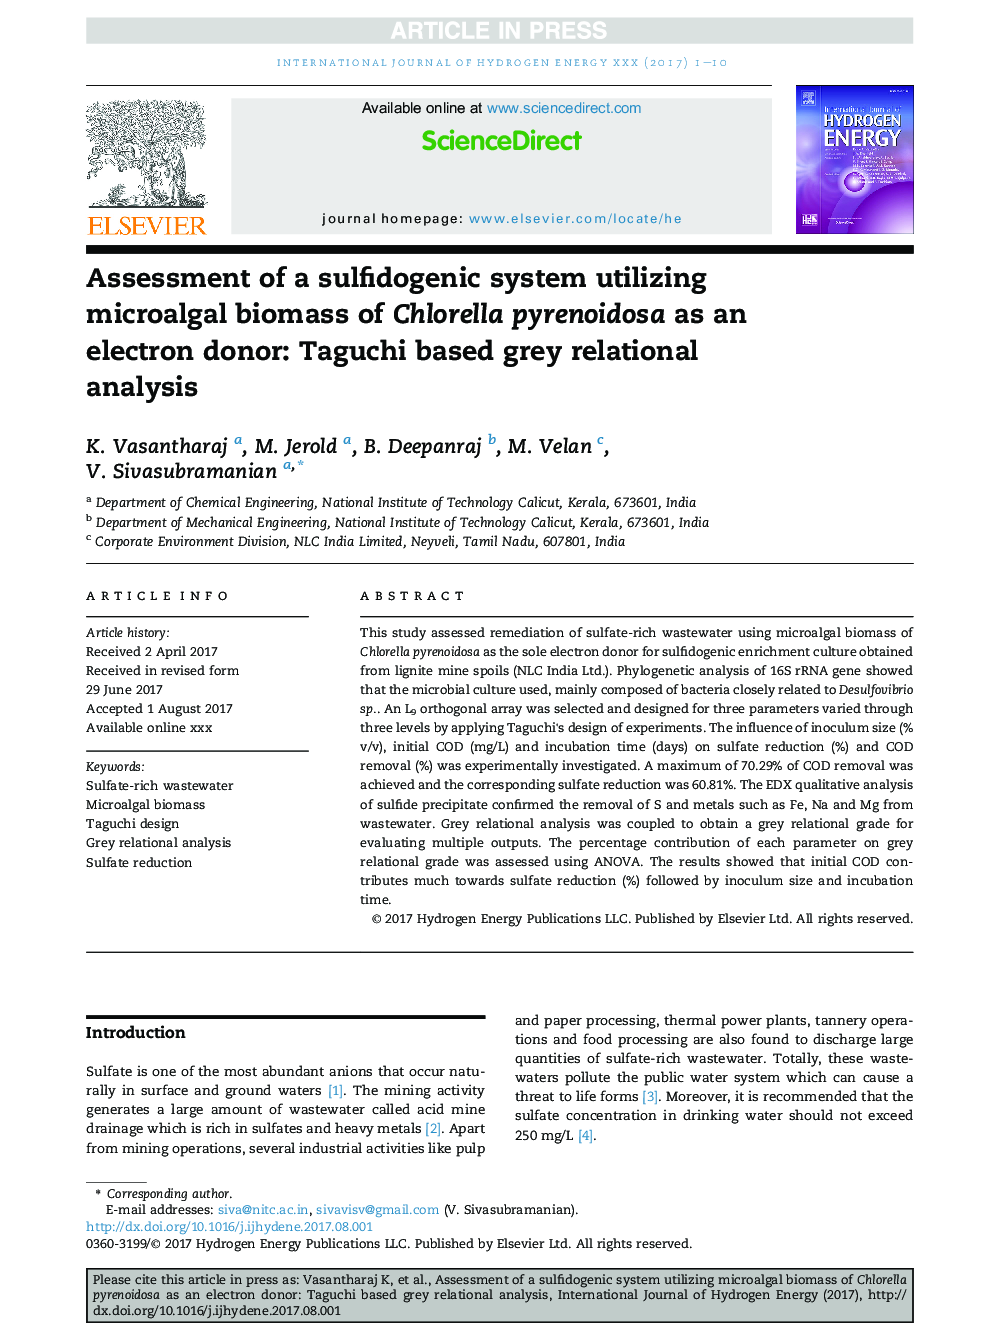 Assessment of a sulfidogenic system utilizing microalgal biomass of Chlorella pyrenoidosa as an electron donor: Taguchi based grey relational analysis